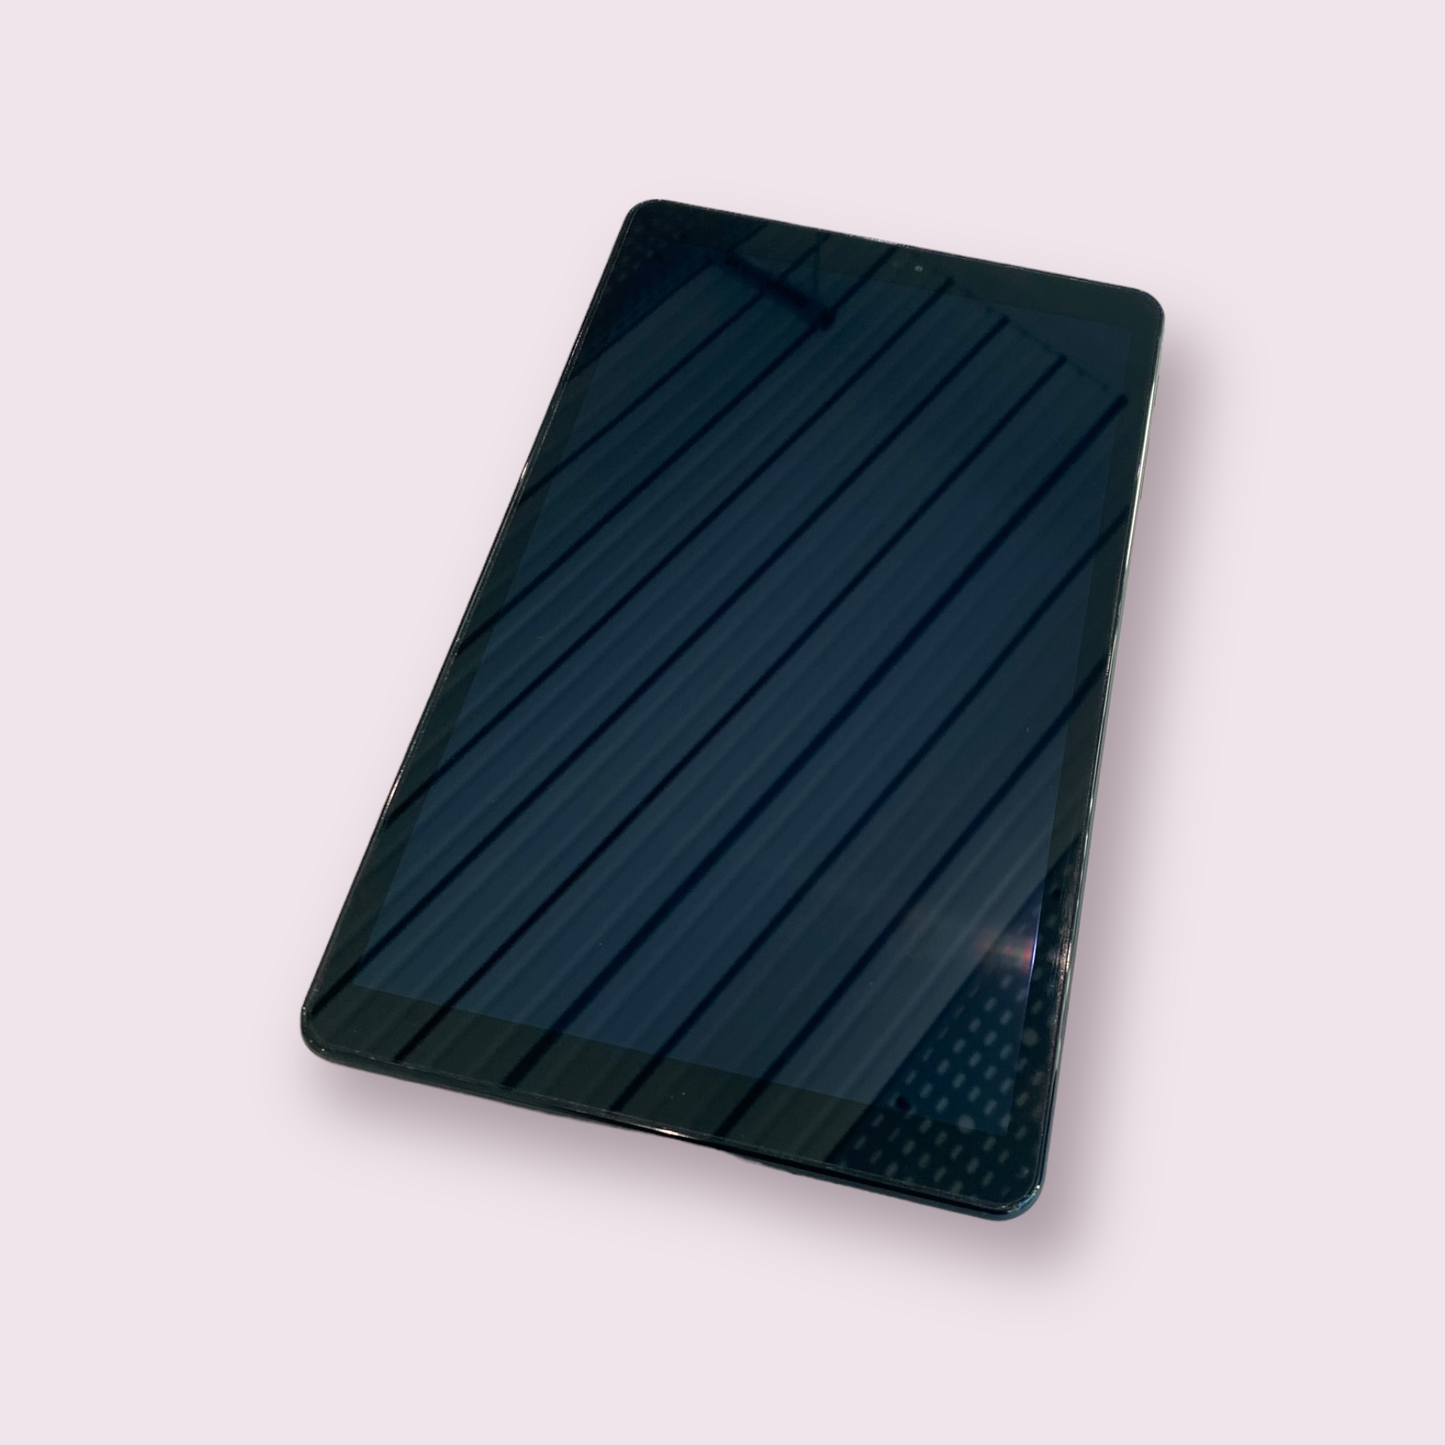 Samsung Galaxy TAB A 10.5 32GB black Tablet - Unlocked - Grade B